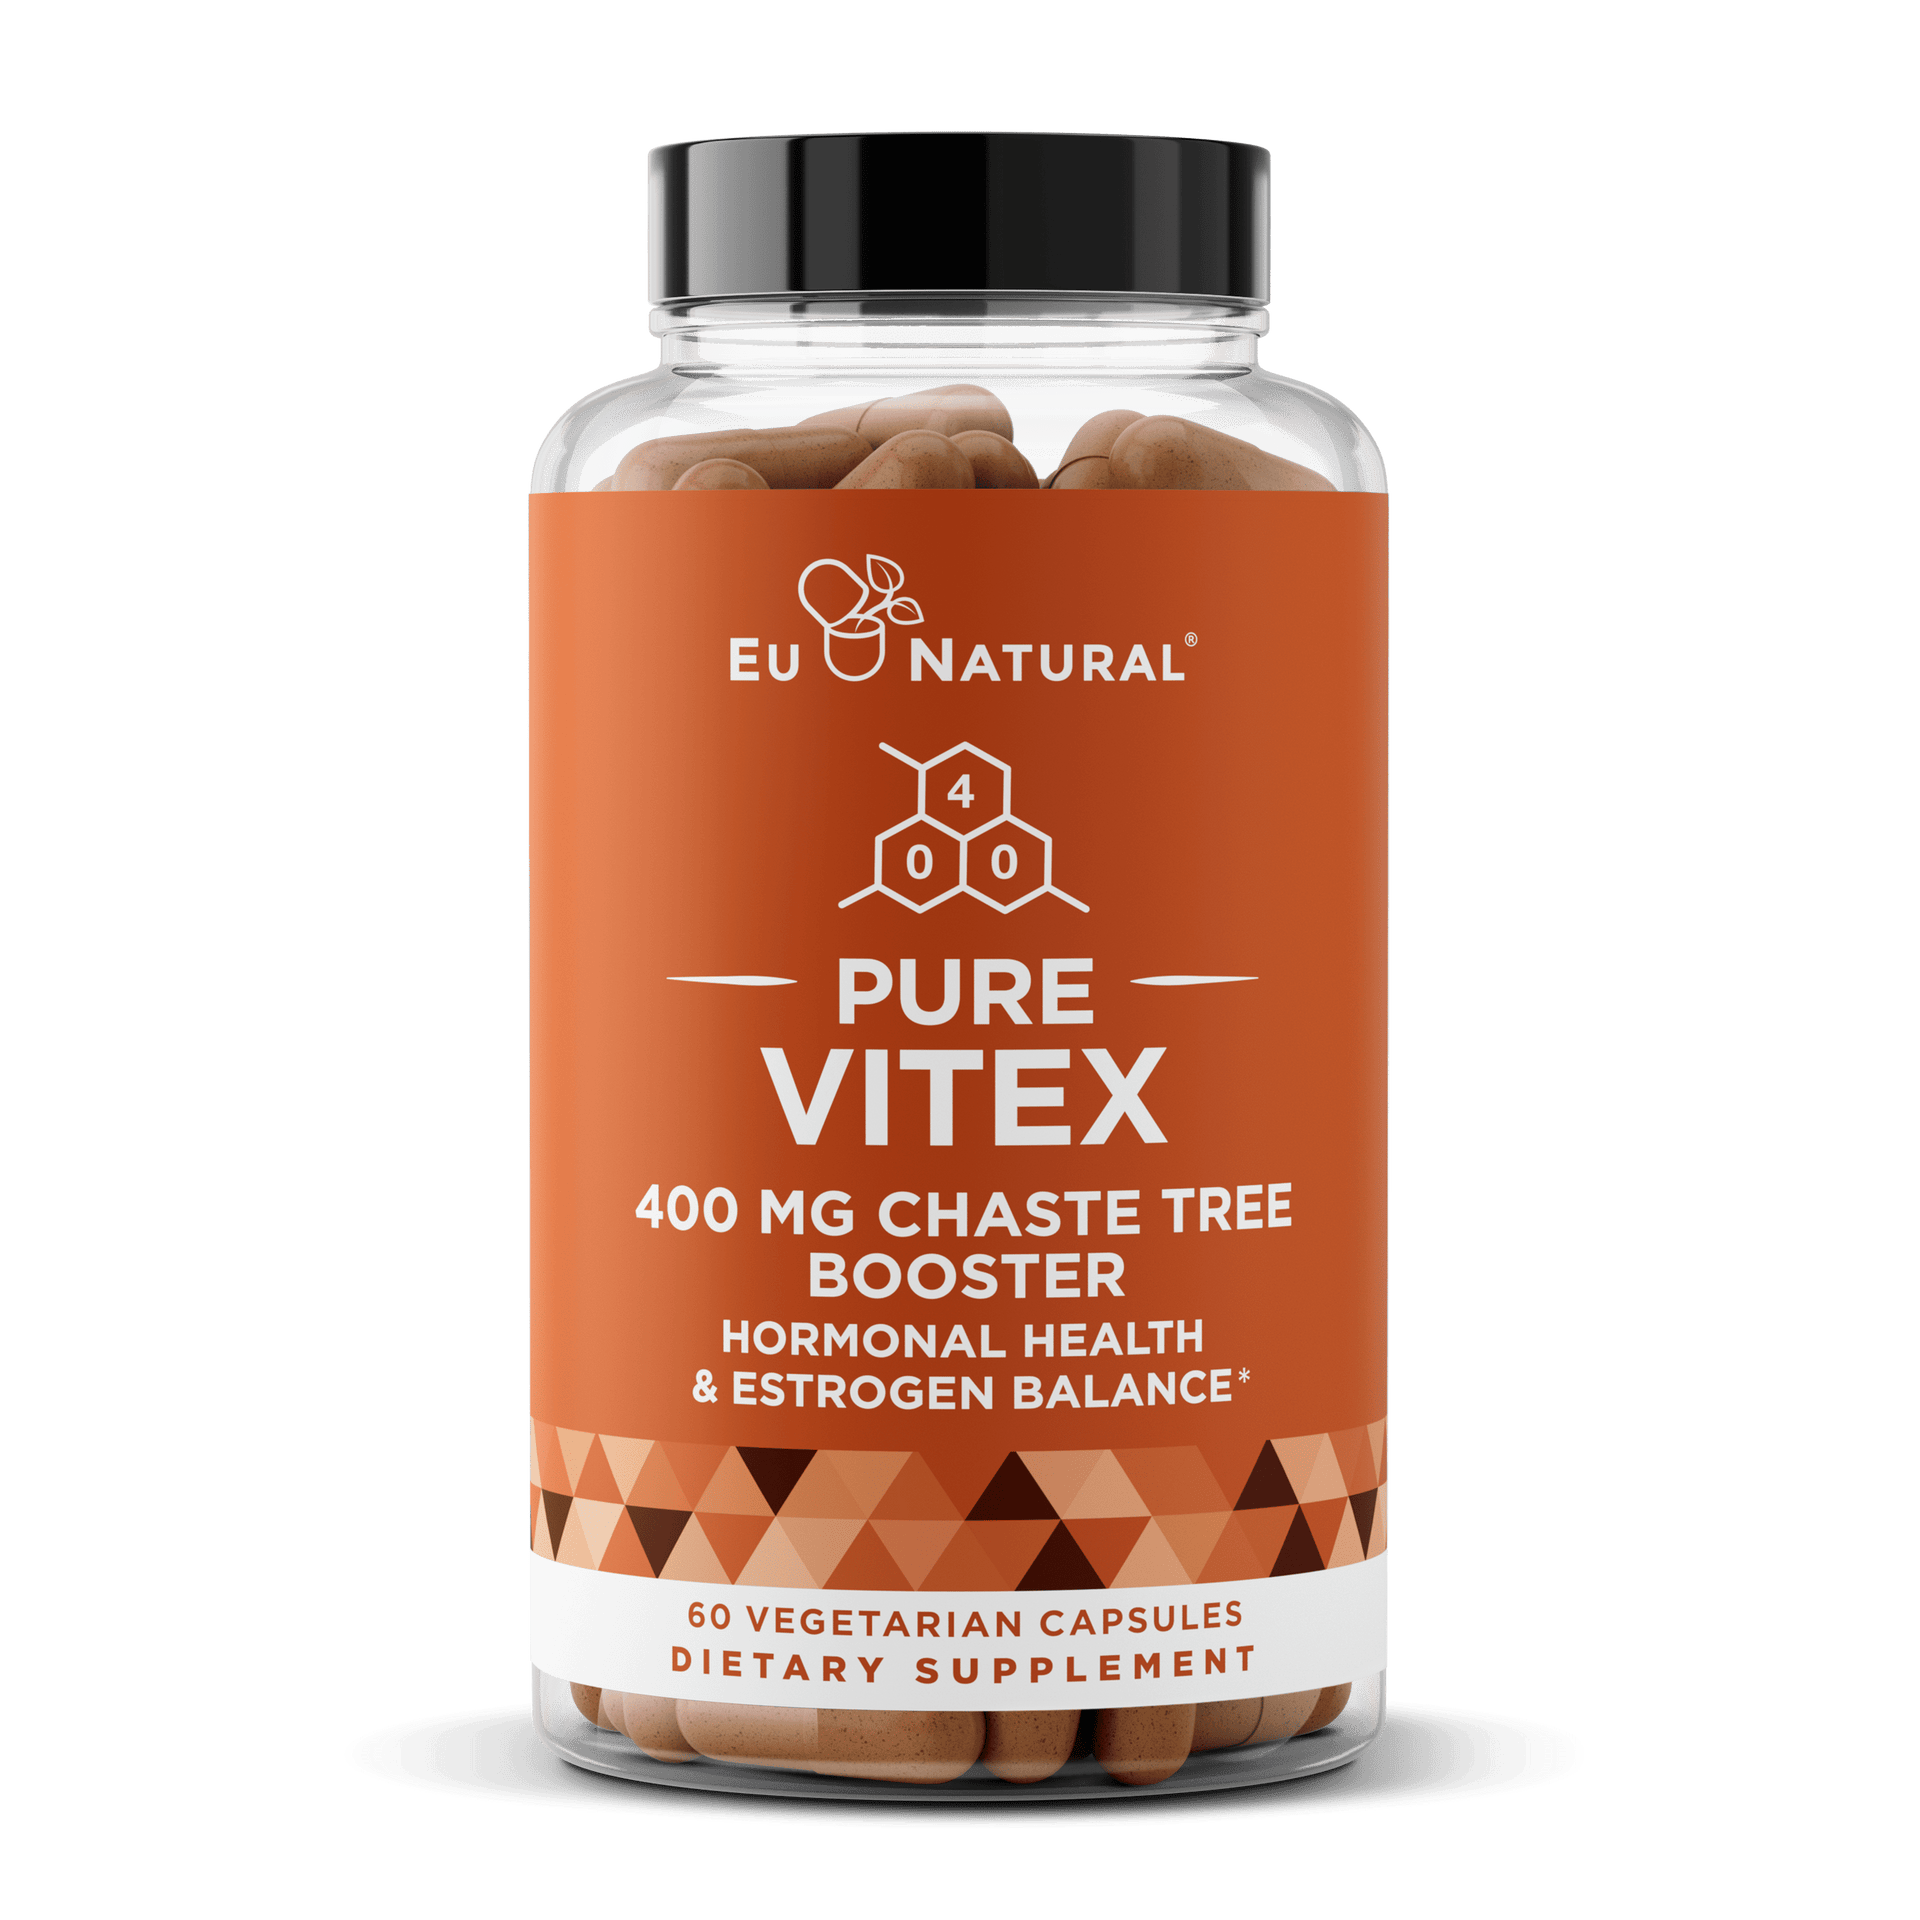 Eu Natural PURE VITEX — Chaste Tree Hormone & Estrogen Balance